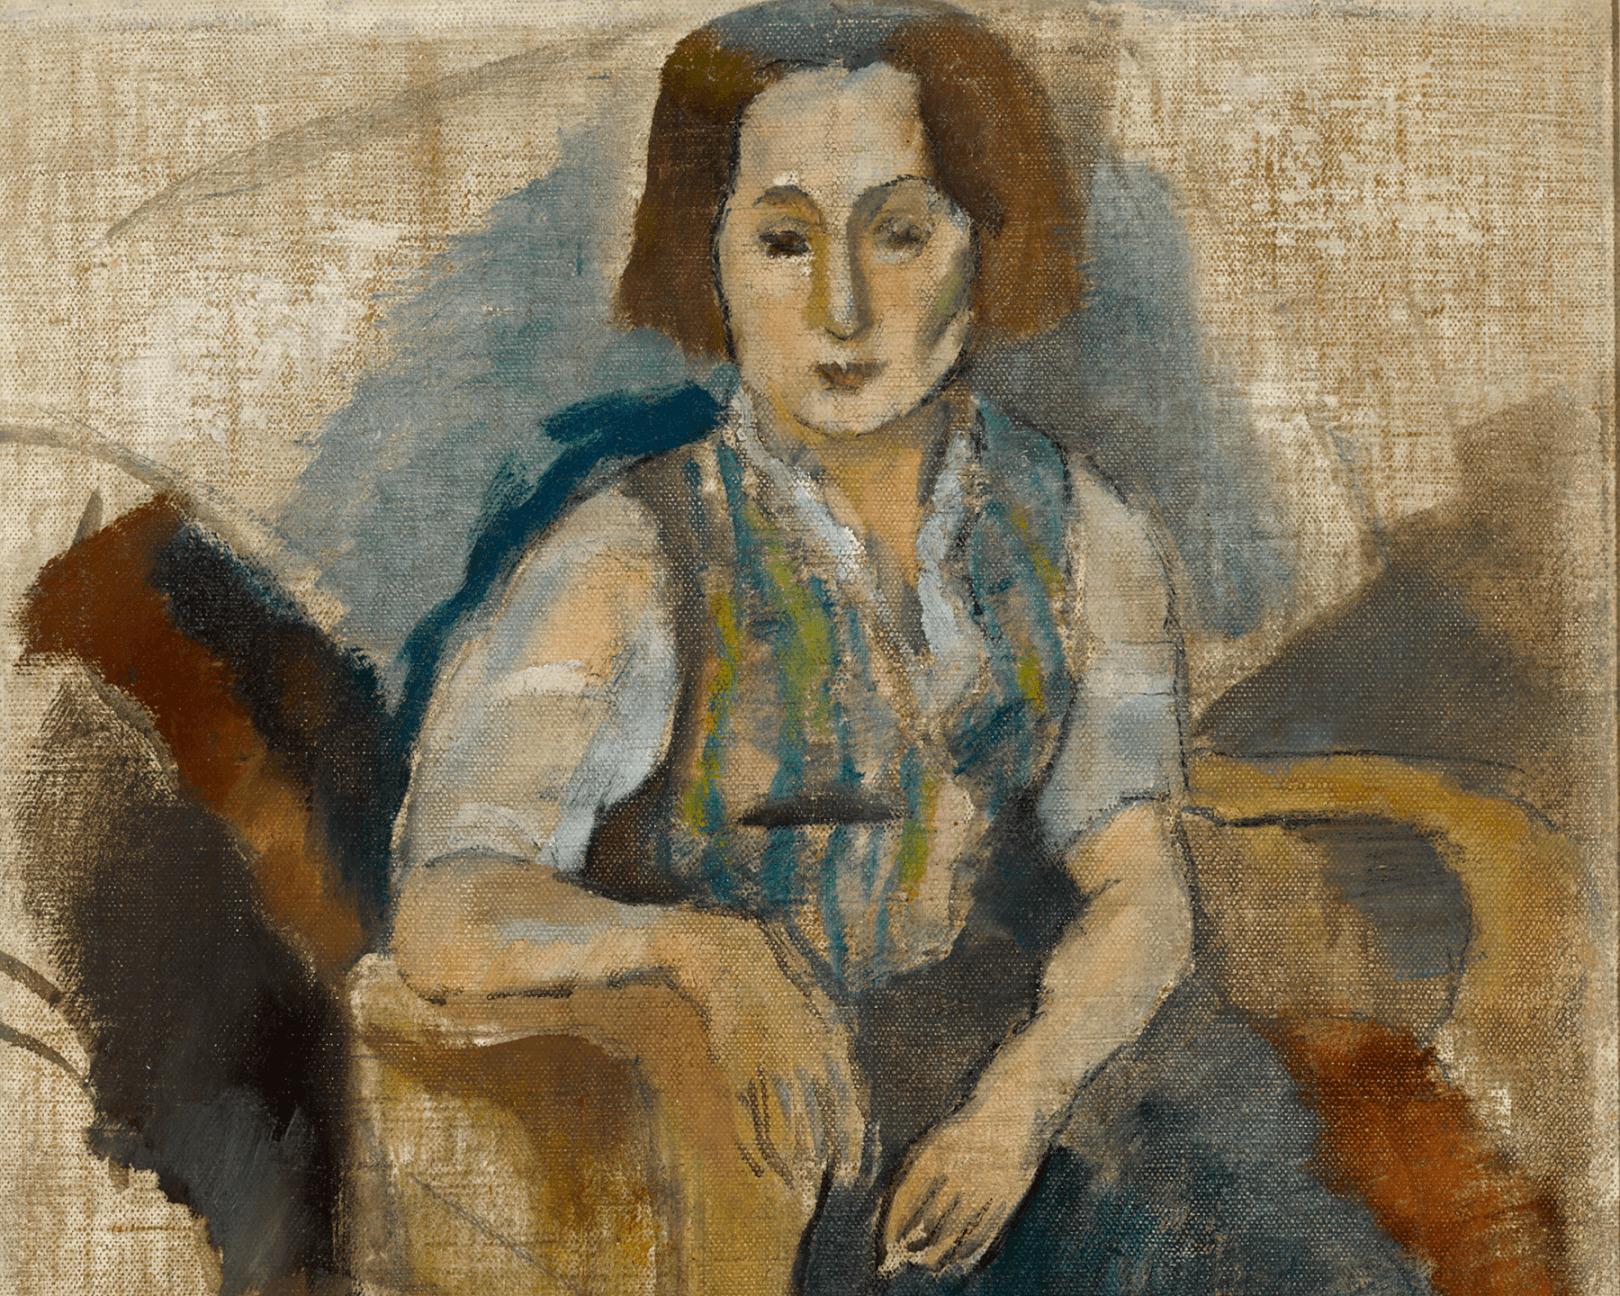 Femme aux Souliers Noir (Frau in schwarzen Schuhen) (Moderne), Painting, von Jules Pascin